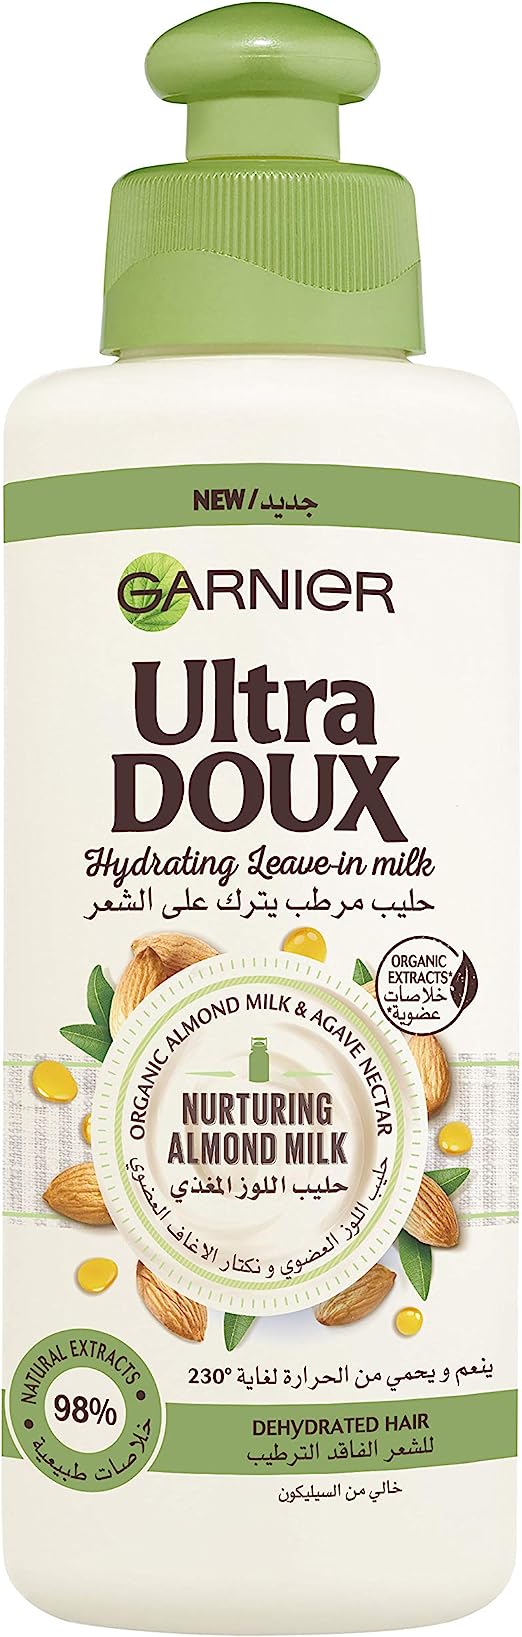 Garnier Ultra Doux Almond Milk Leave In Conditioning Cream - 200ml 2 reviews